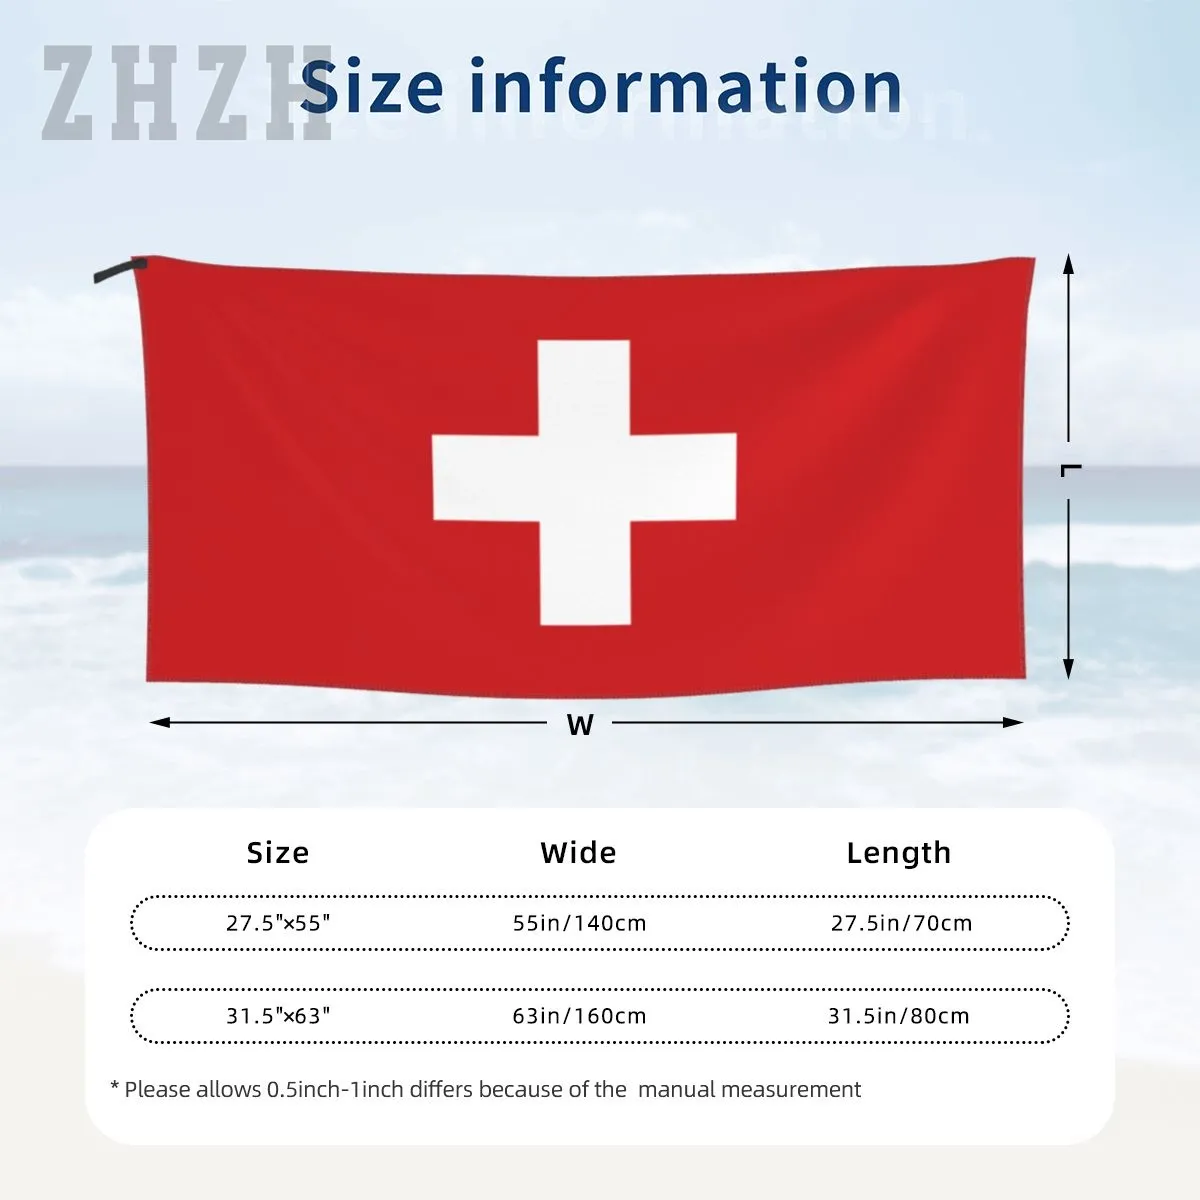 More Design Switzerland Flag Swiss Emblem Bath Towel Quick dry Microfiber Absorbing Soft Water Breathable Beach Swimming